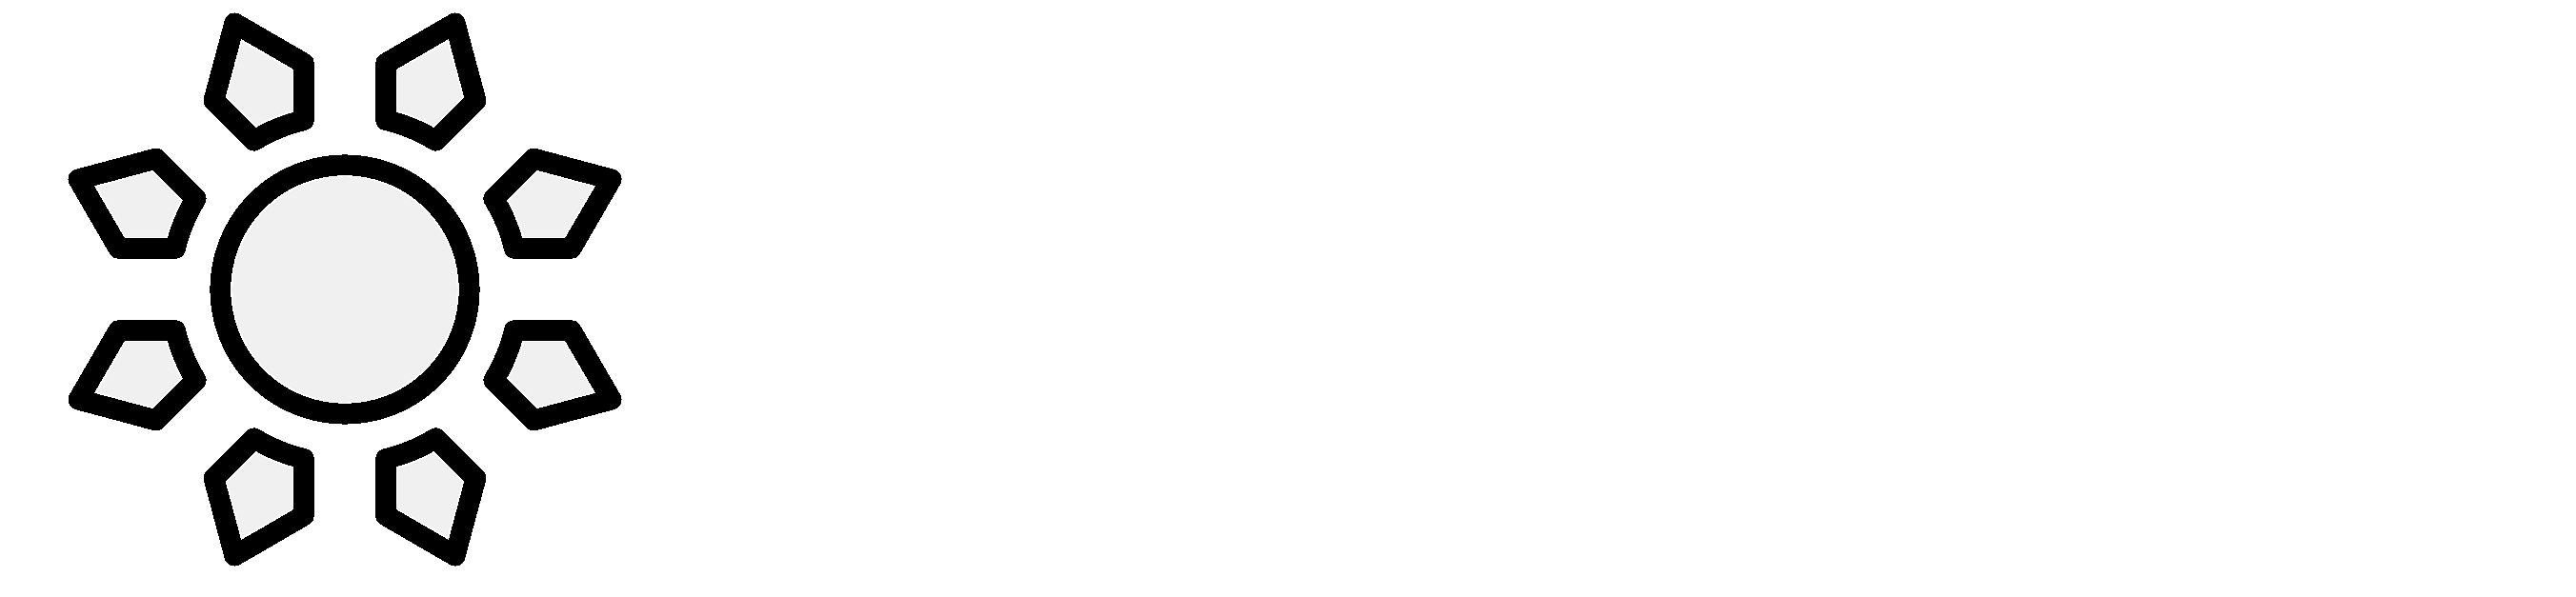 codeiful logo with sun